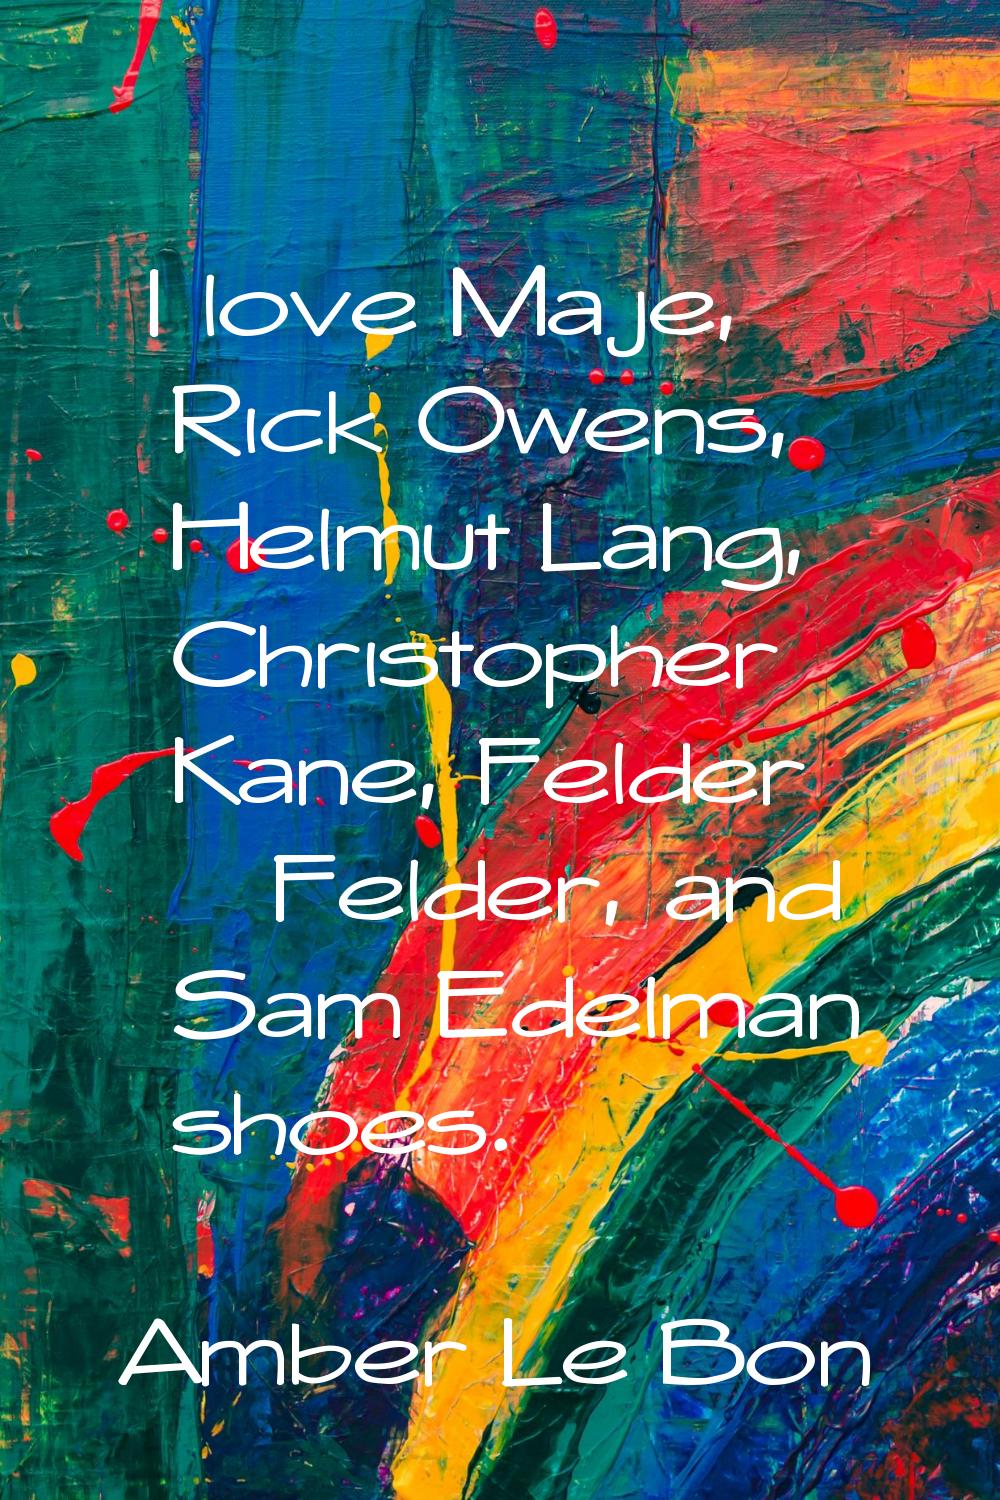 I love Maje, Rick Owens, Helmut Lang, Christopher Kane, Felder + Felder, and Sam Edelman shoes.